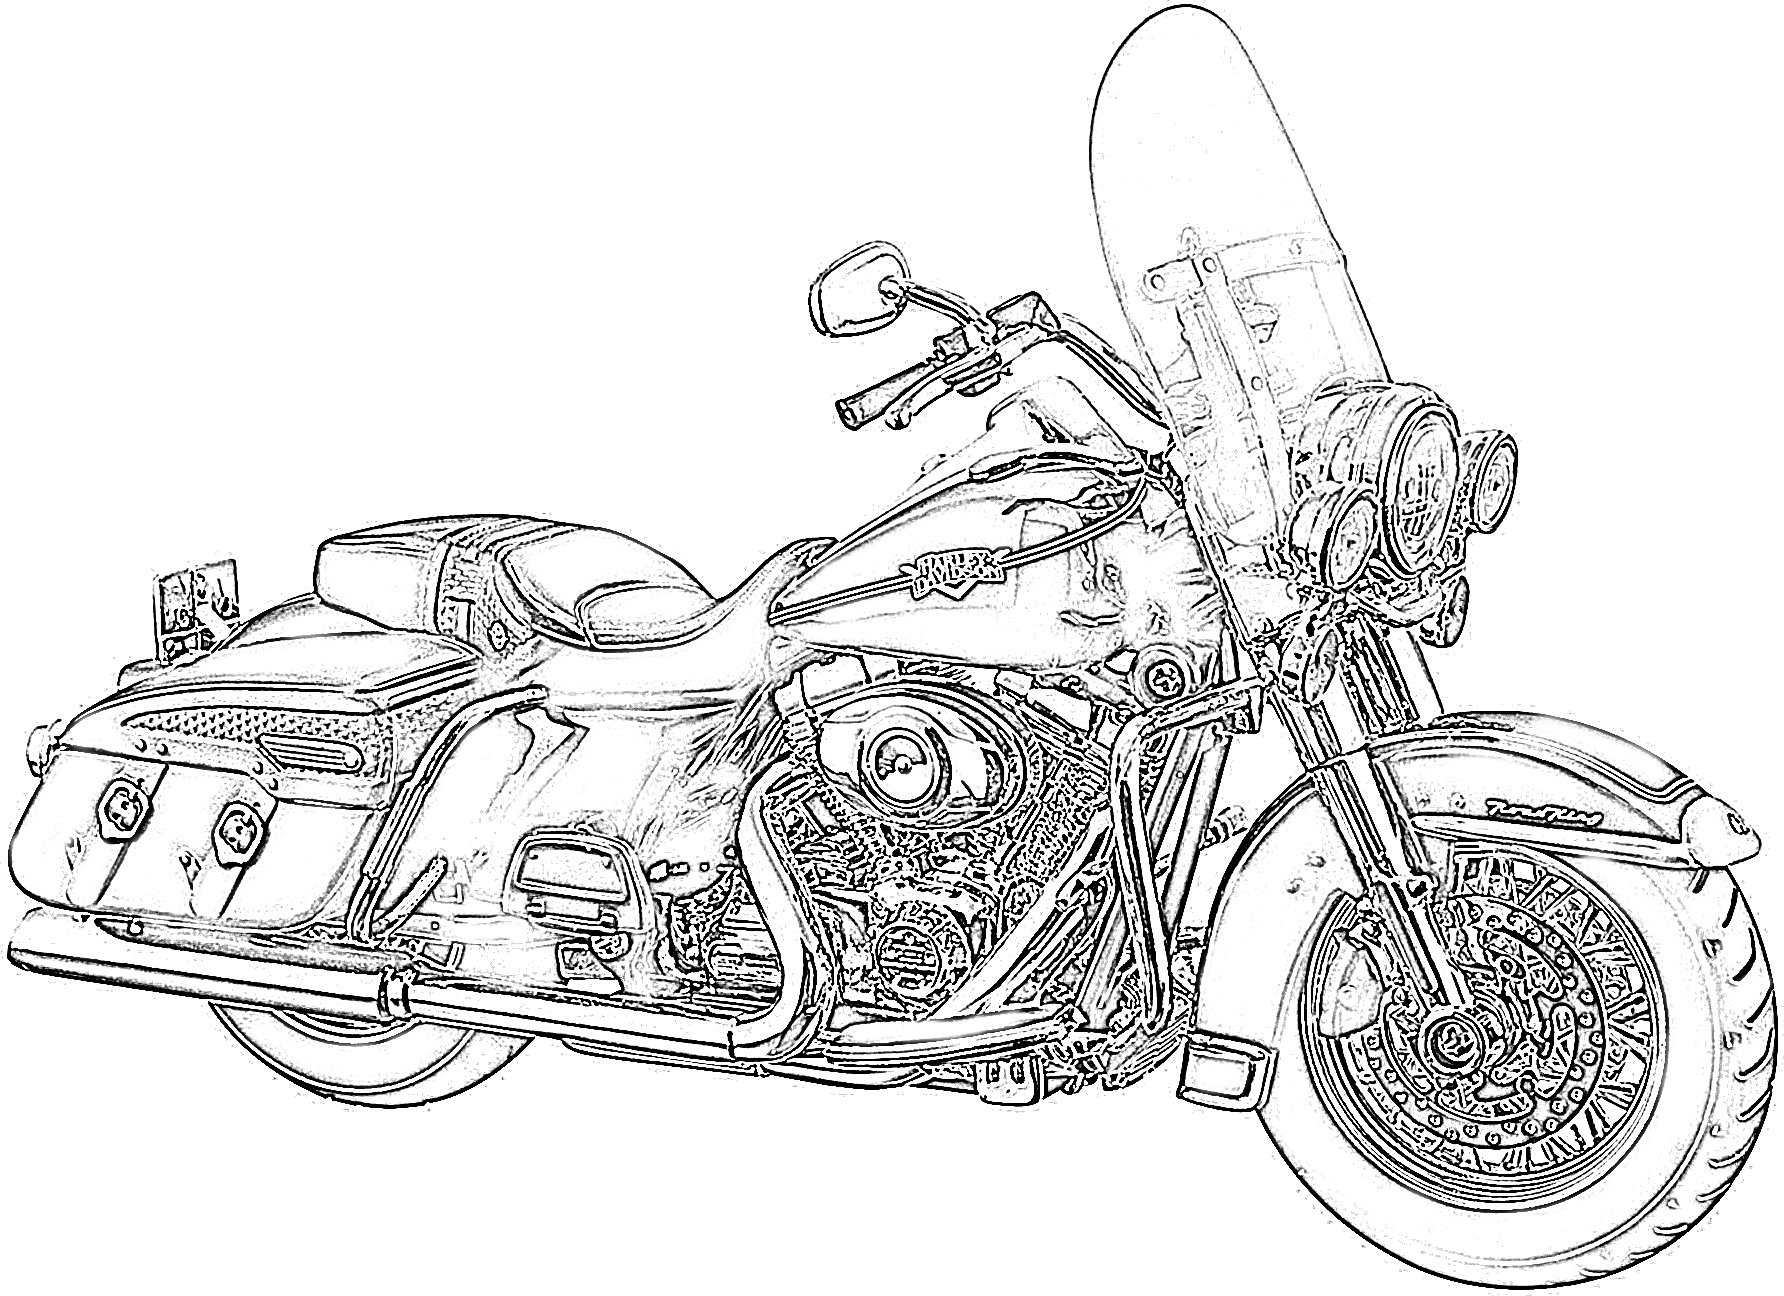 Harley Davidson road king coloring page